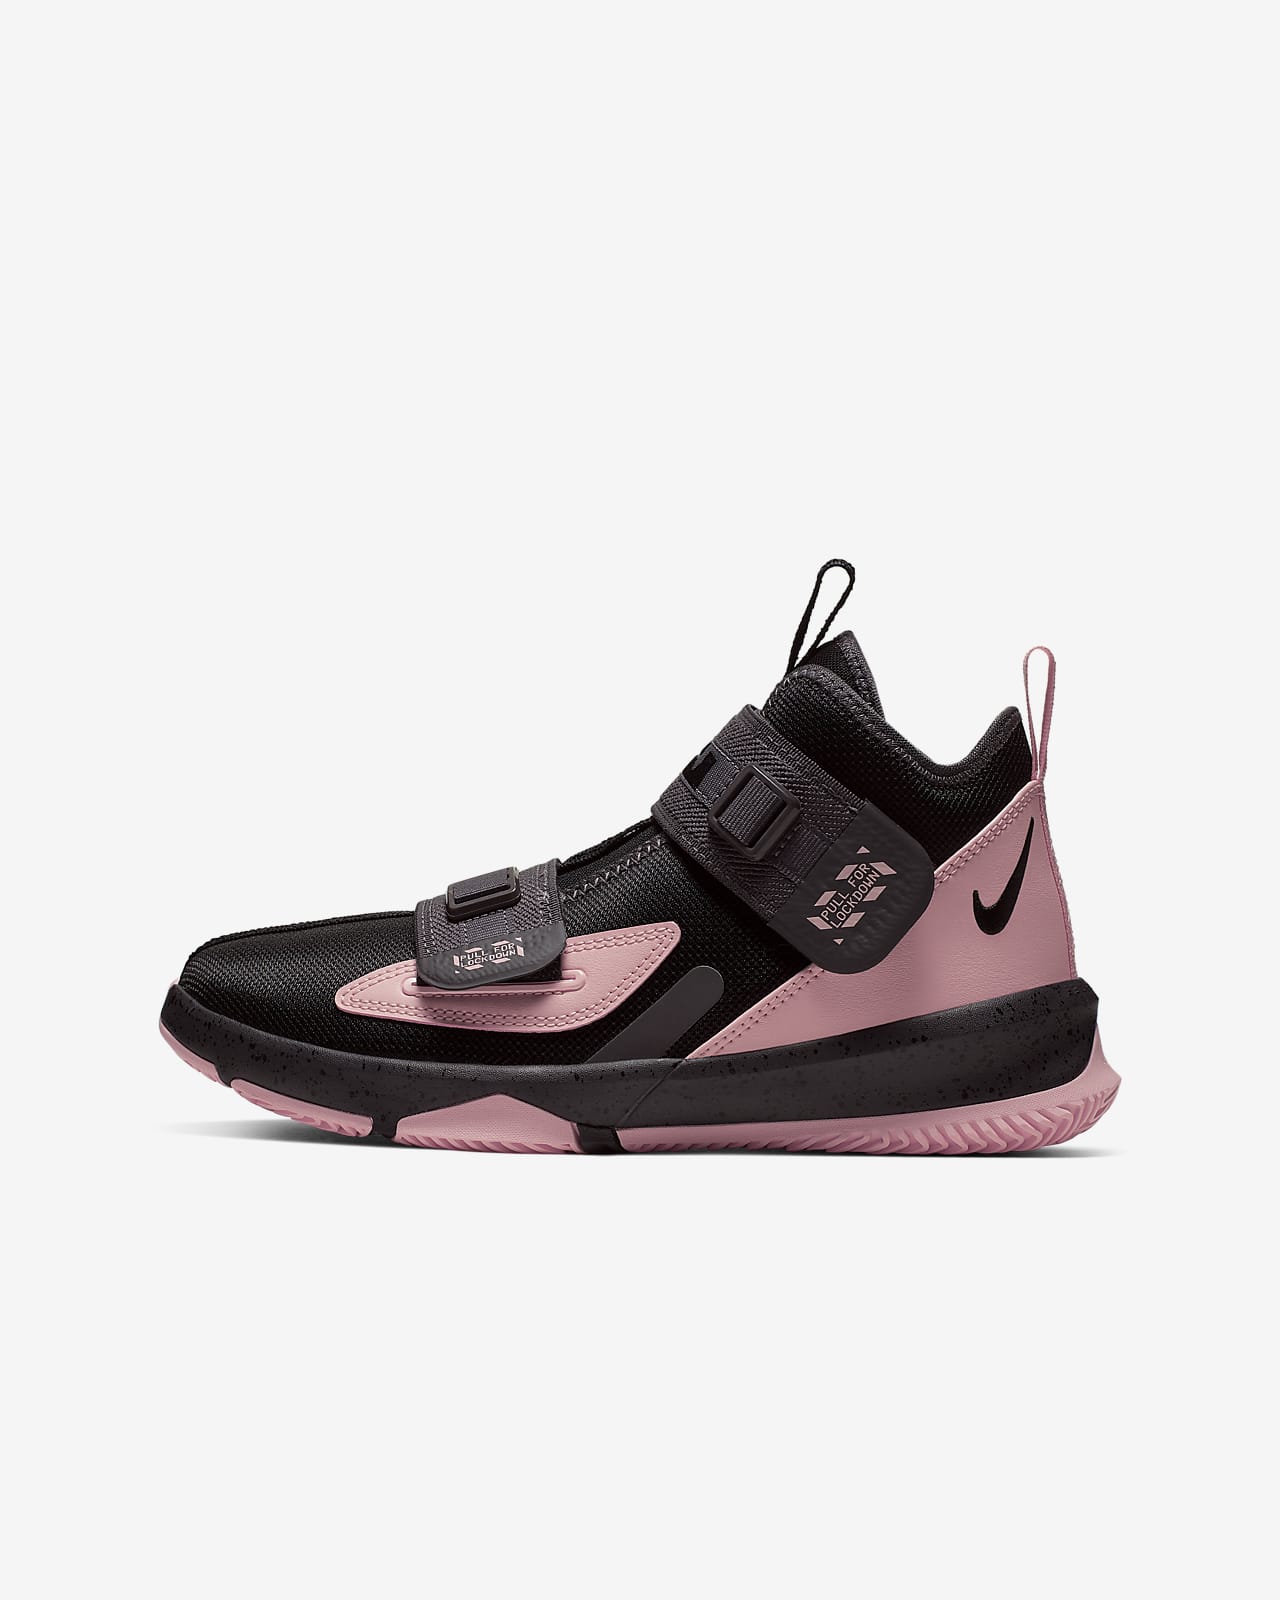 lebron pink basketball shoes